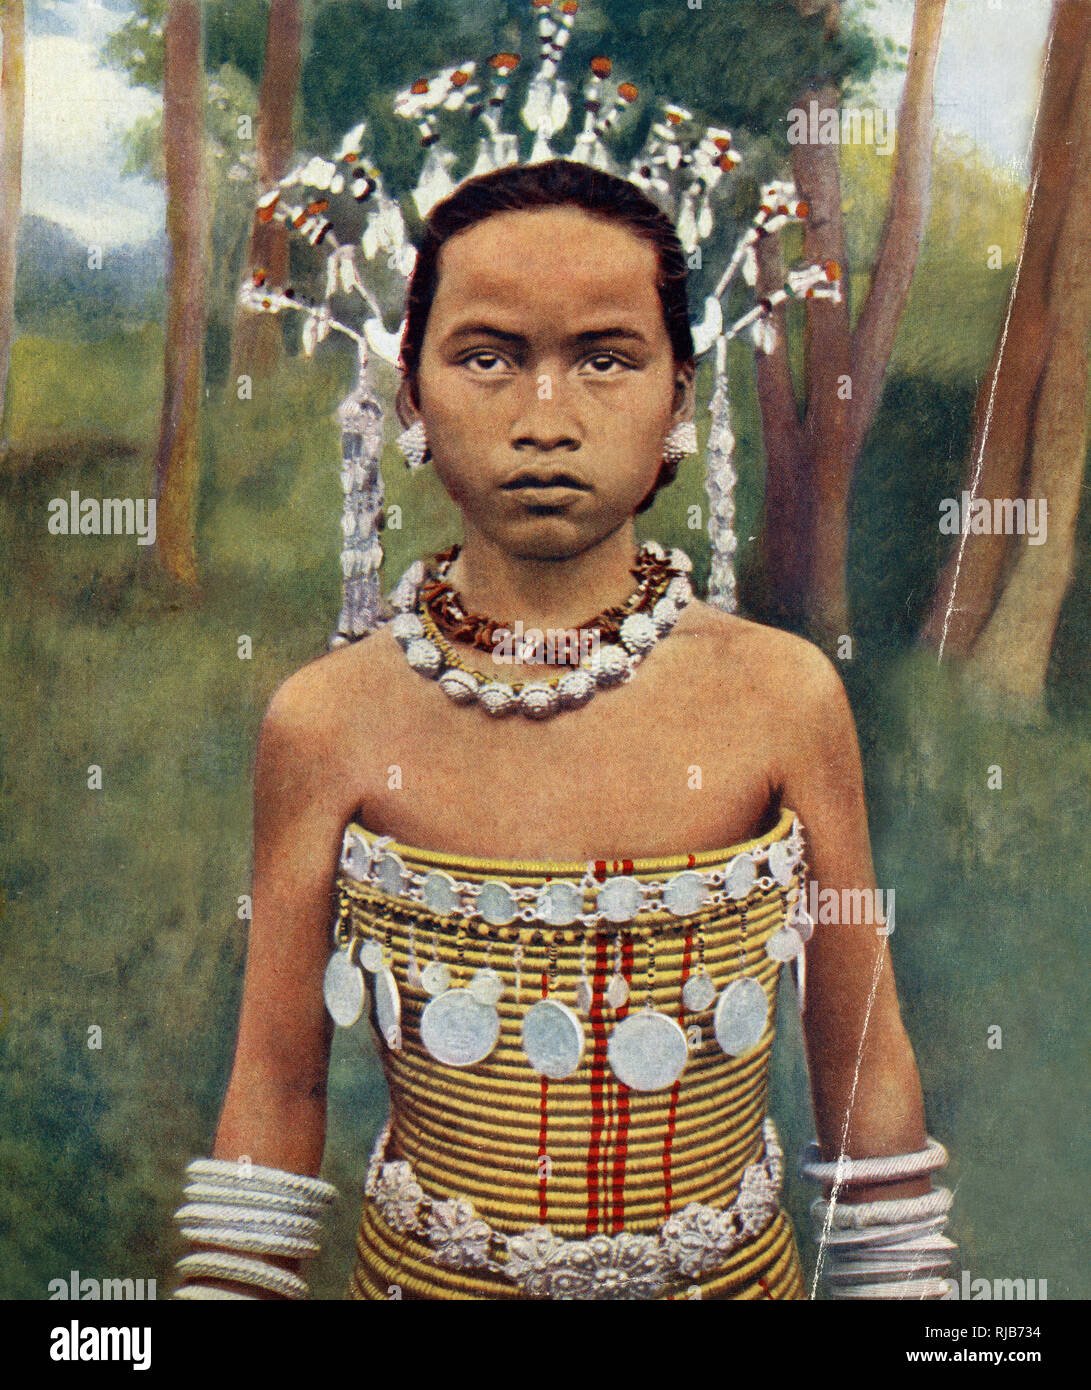 Young Sea Dayak or Iban woman, Borneo, SE Asia Stock Photo